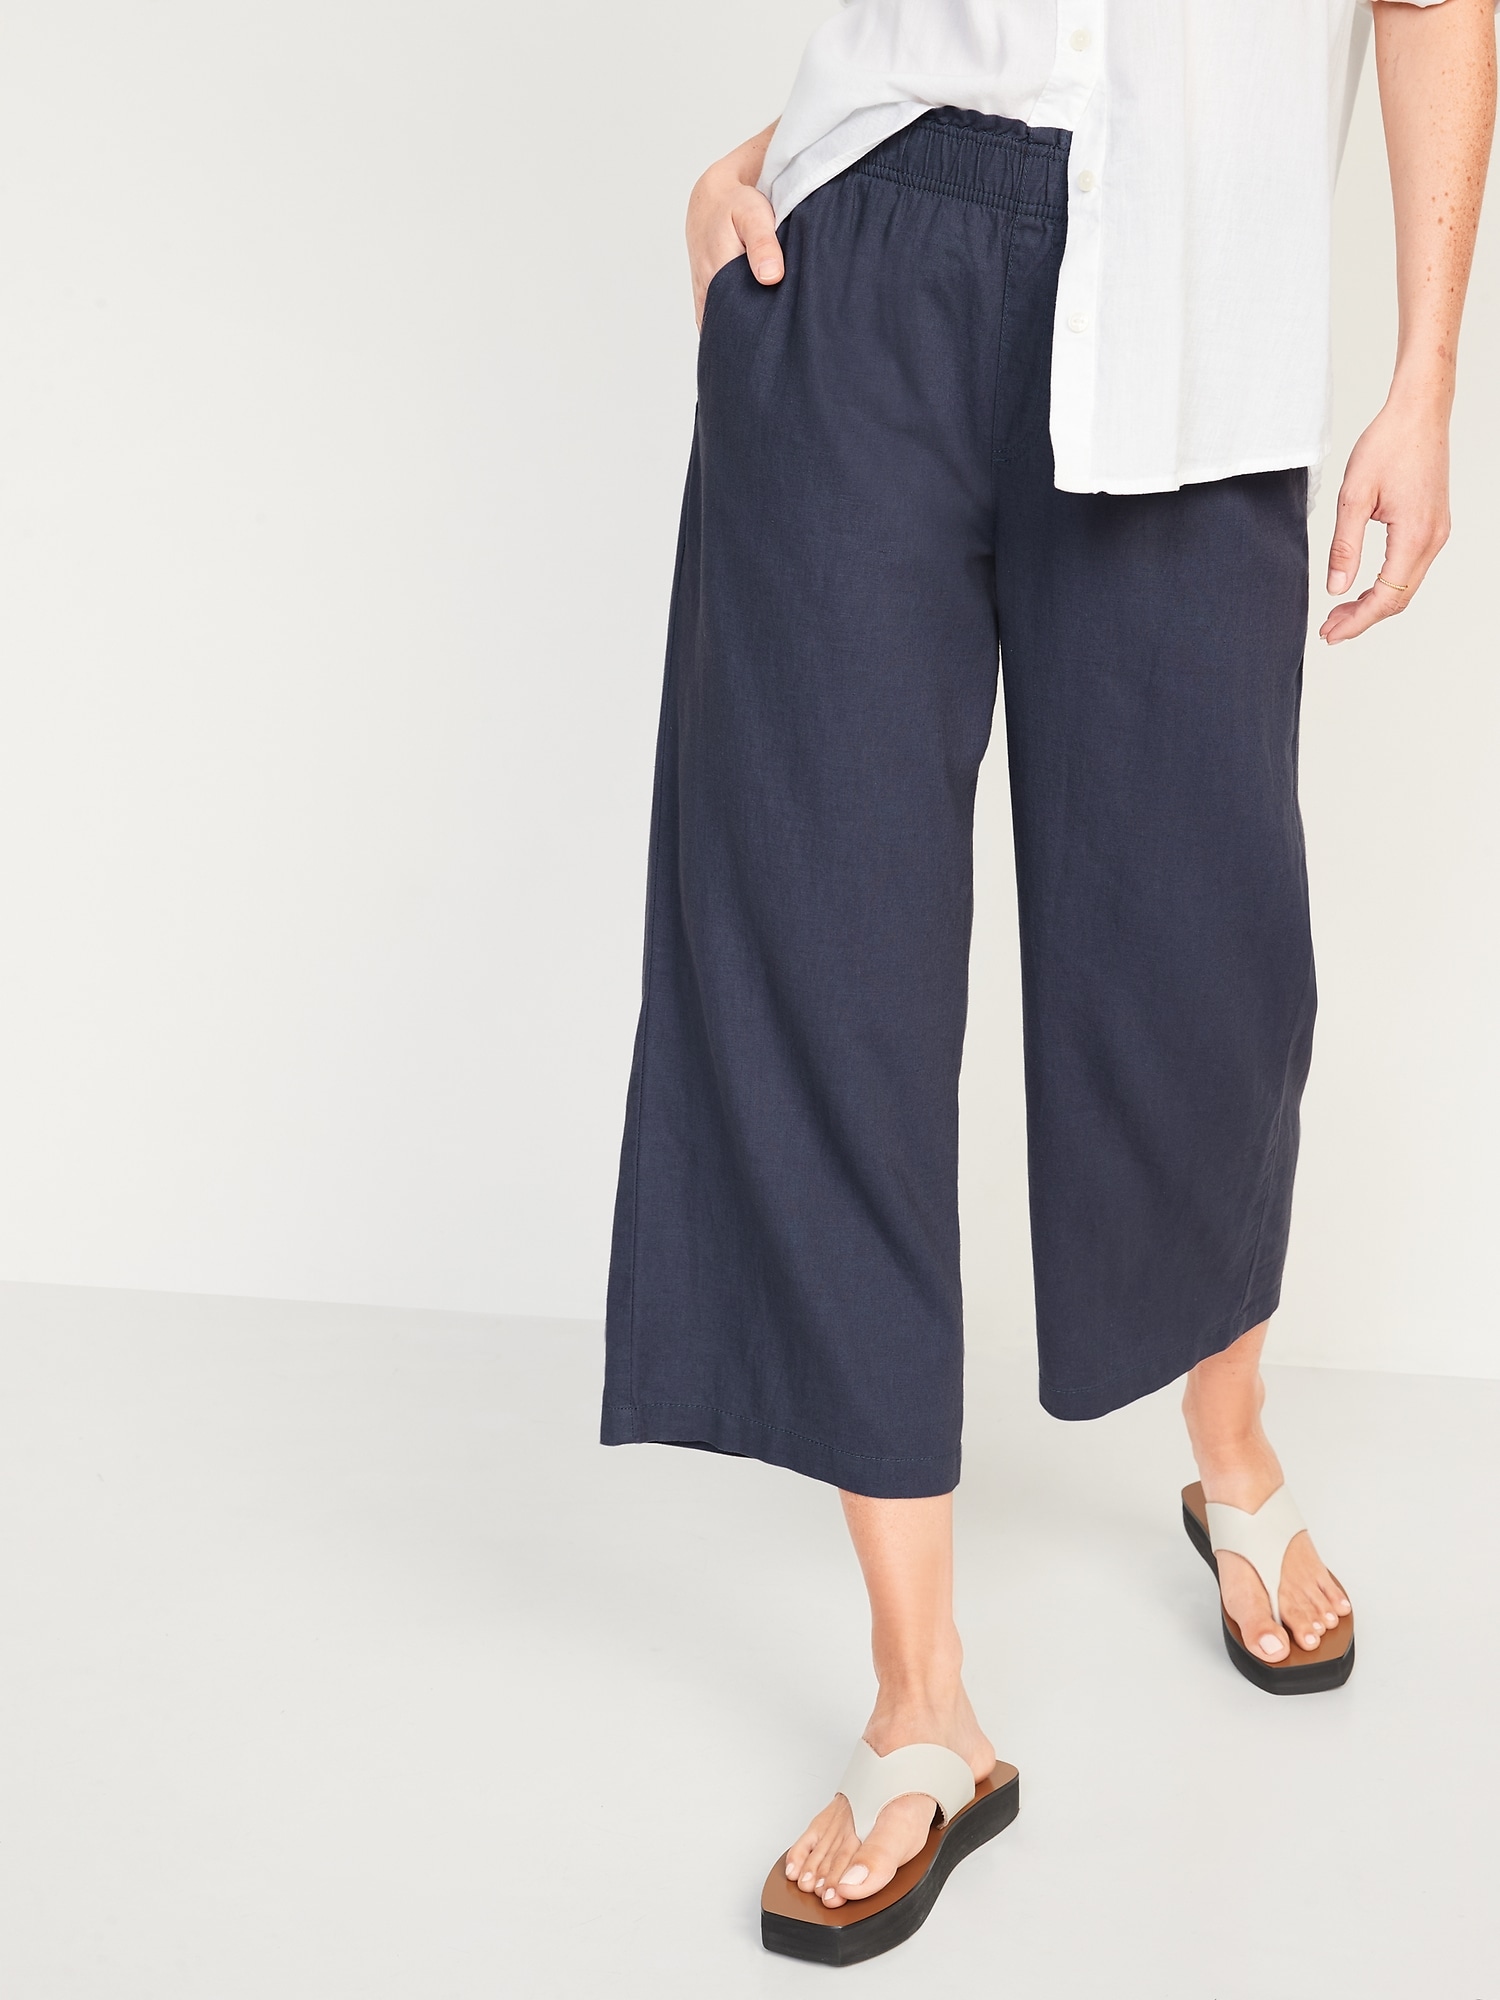 nwt // tibi striped wide leg culottes pants | eBay